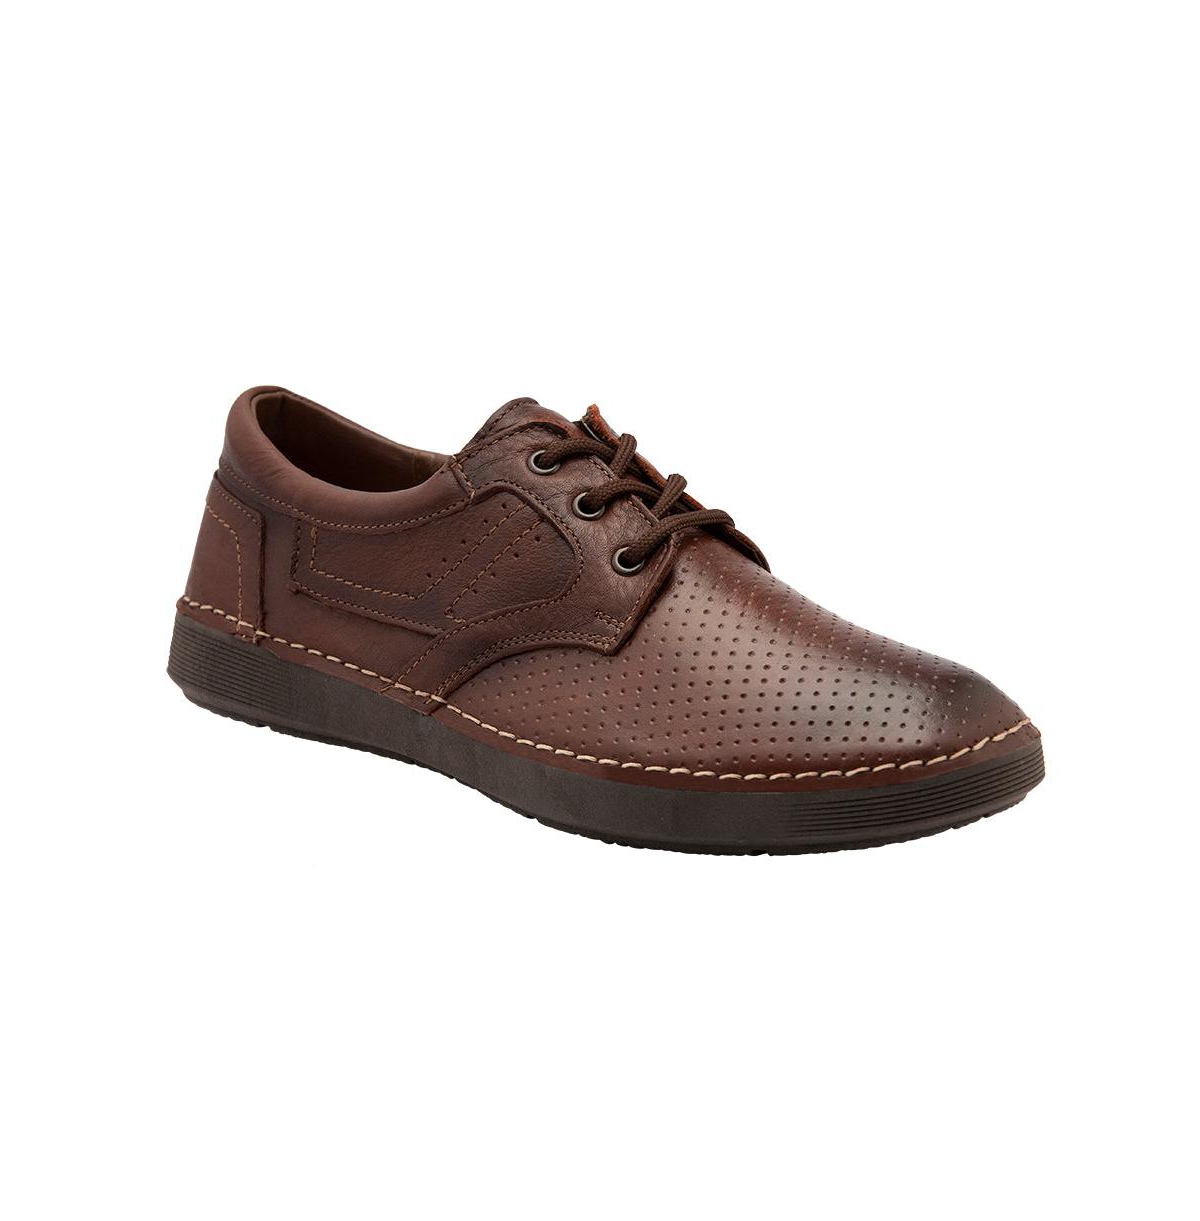 Men's Brown Premium Leather Oxfords, Handmade Unique Shoes With Laces Closure, Iker 8152 - Brown